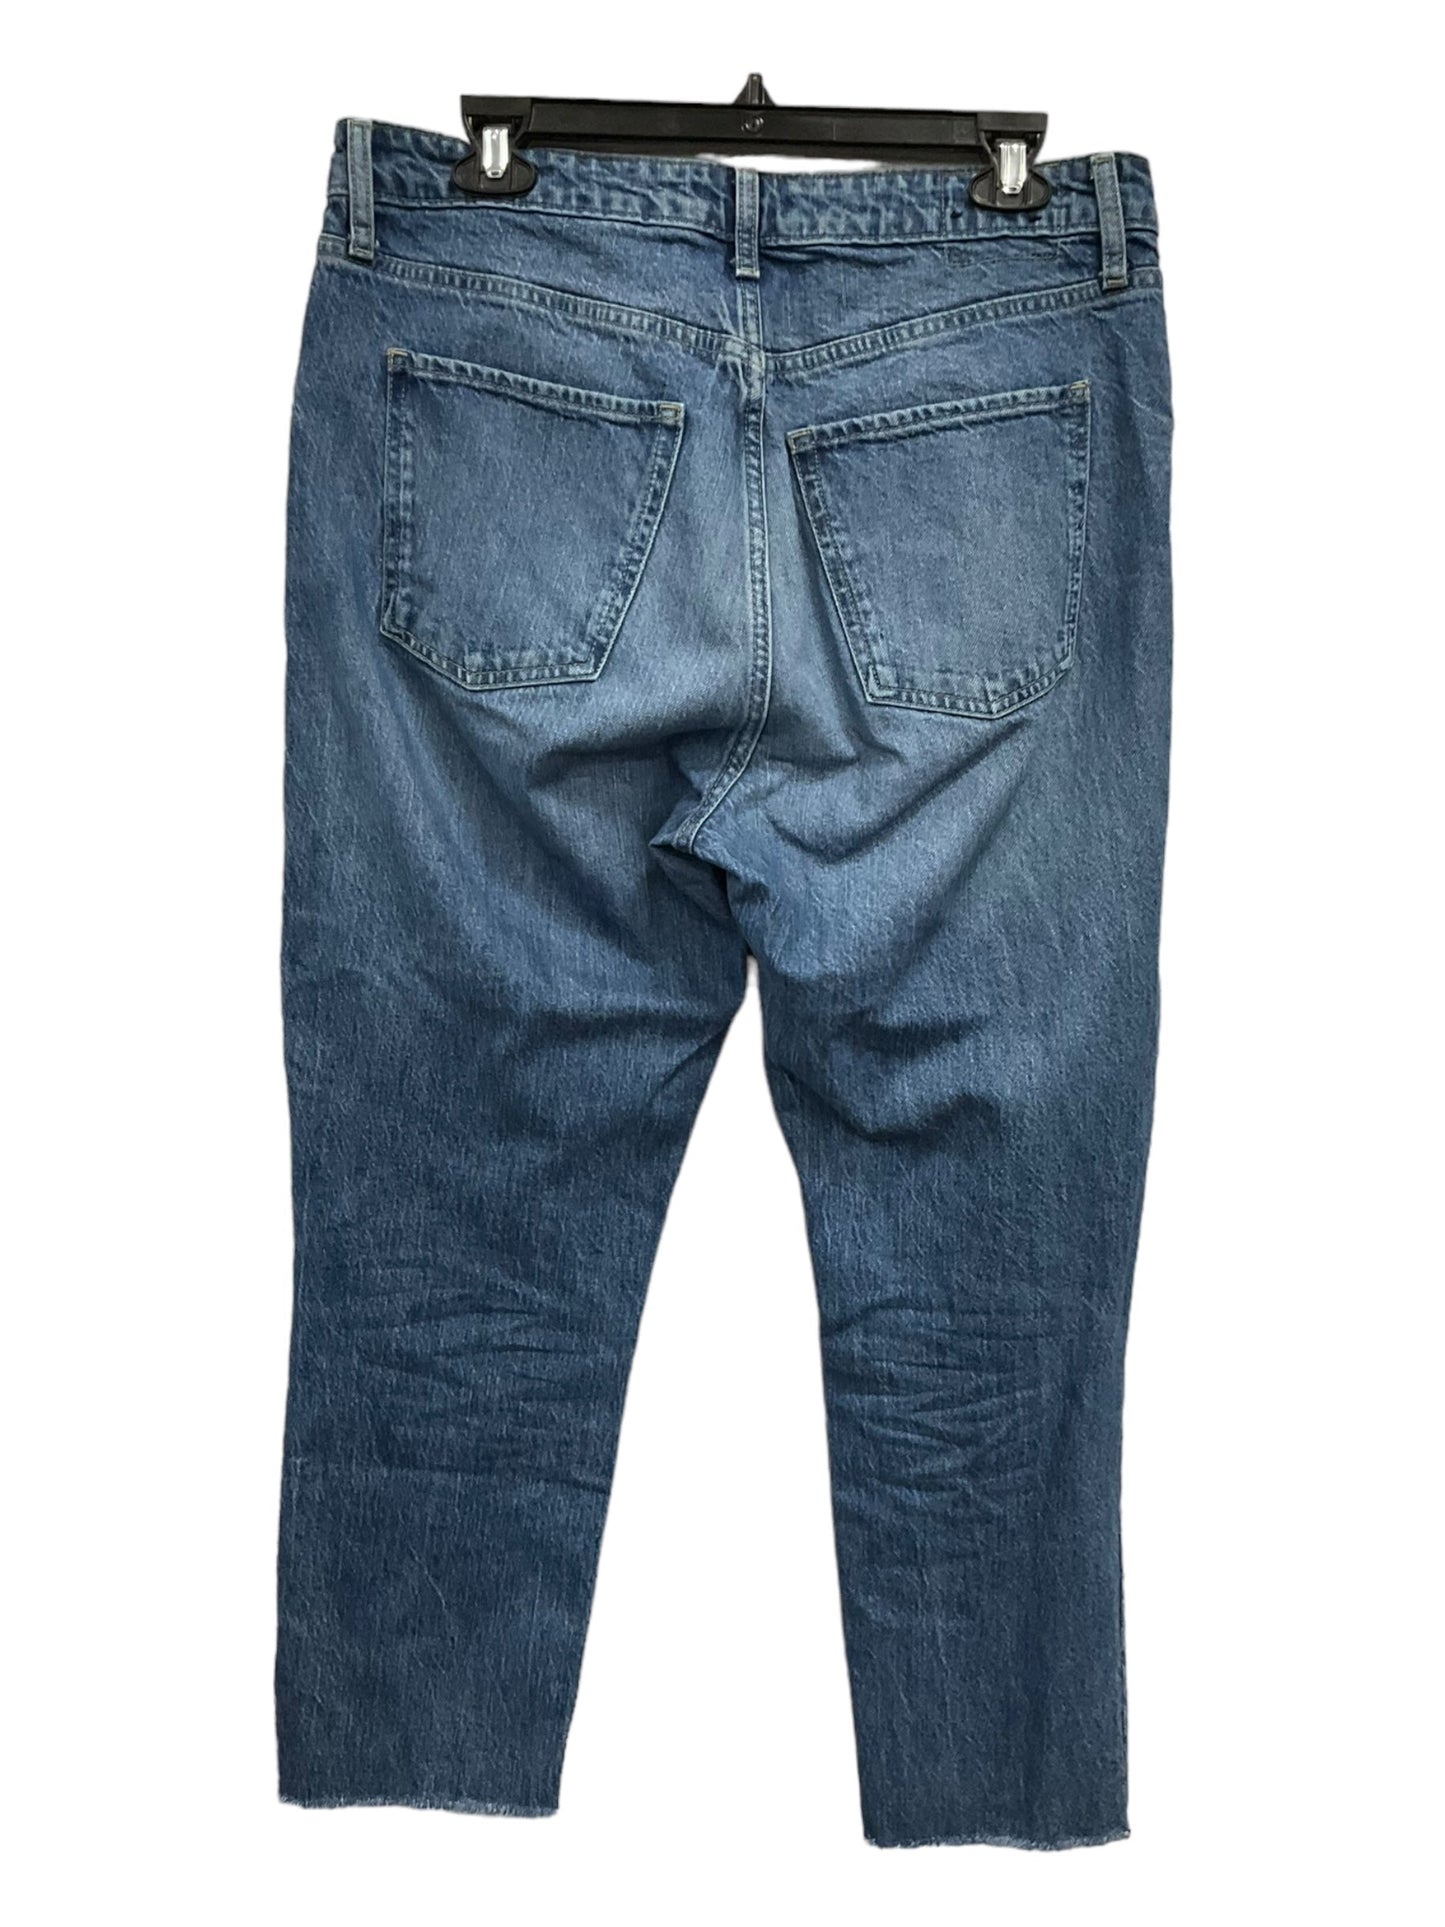 Blue Jeans Boyfriend Gap, Size 10